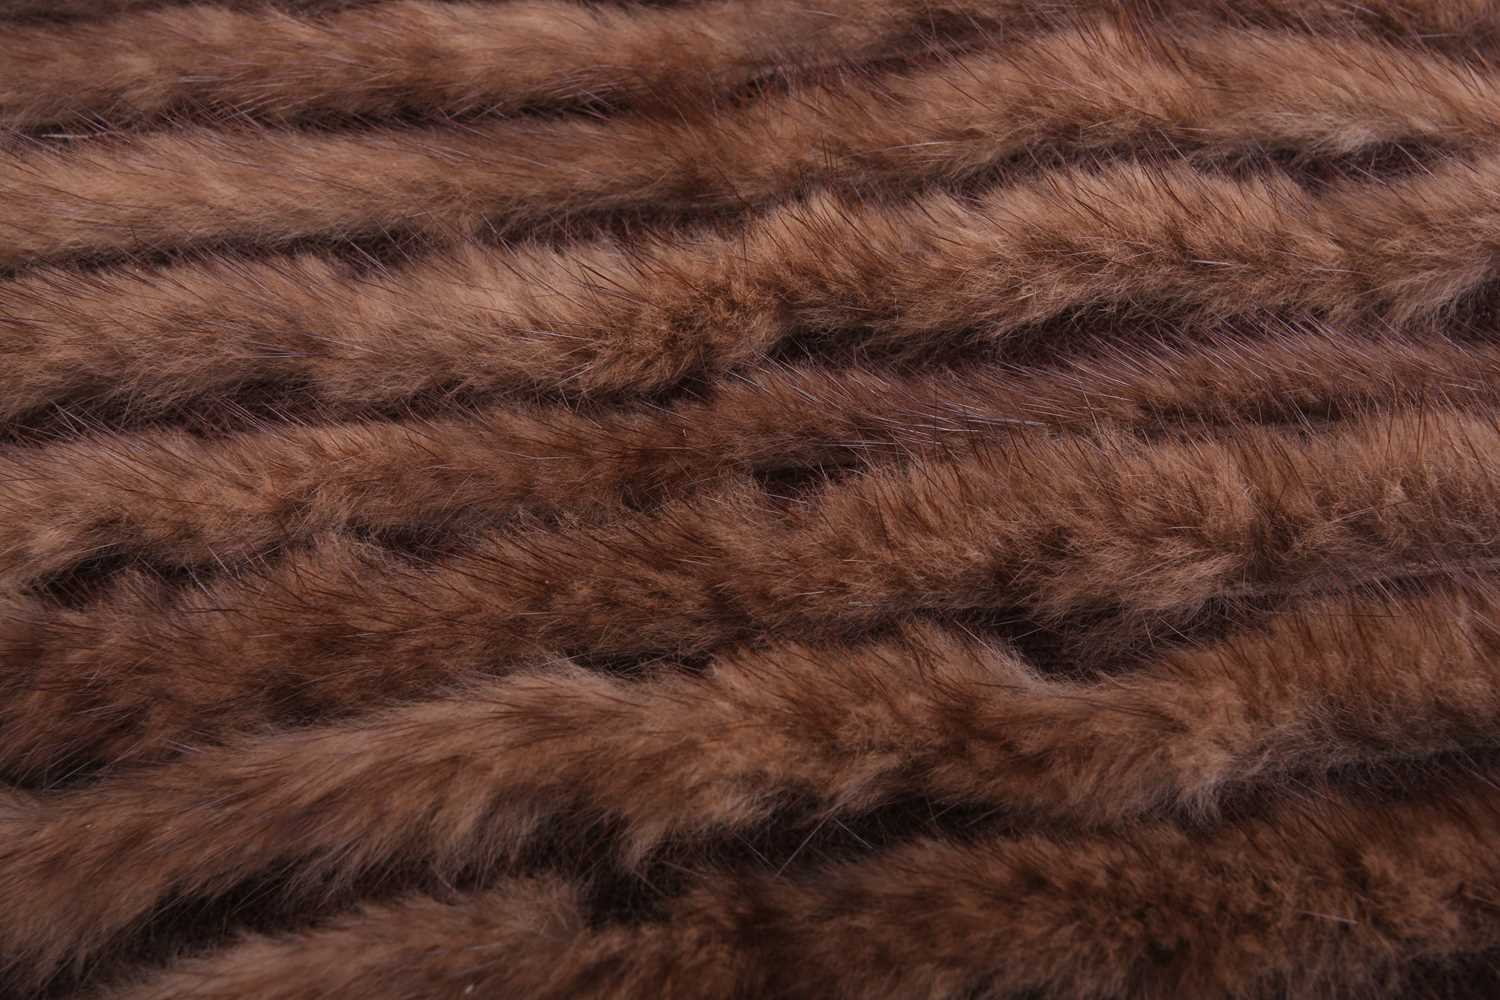 Louis Vuitton - 'Diva' snood in Moka brown mink fur, embellished with pink and orange rhinestone - Image 8 of 10